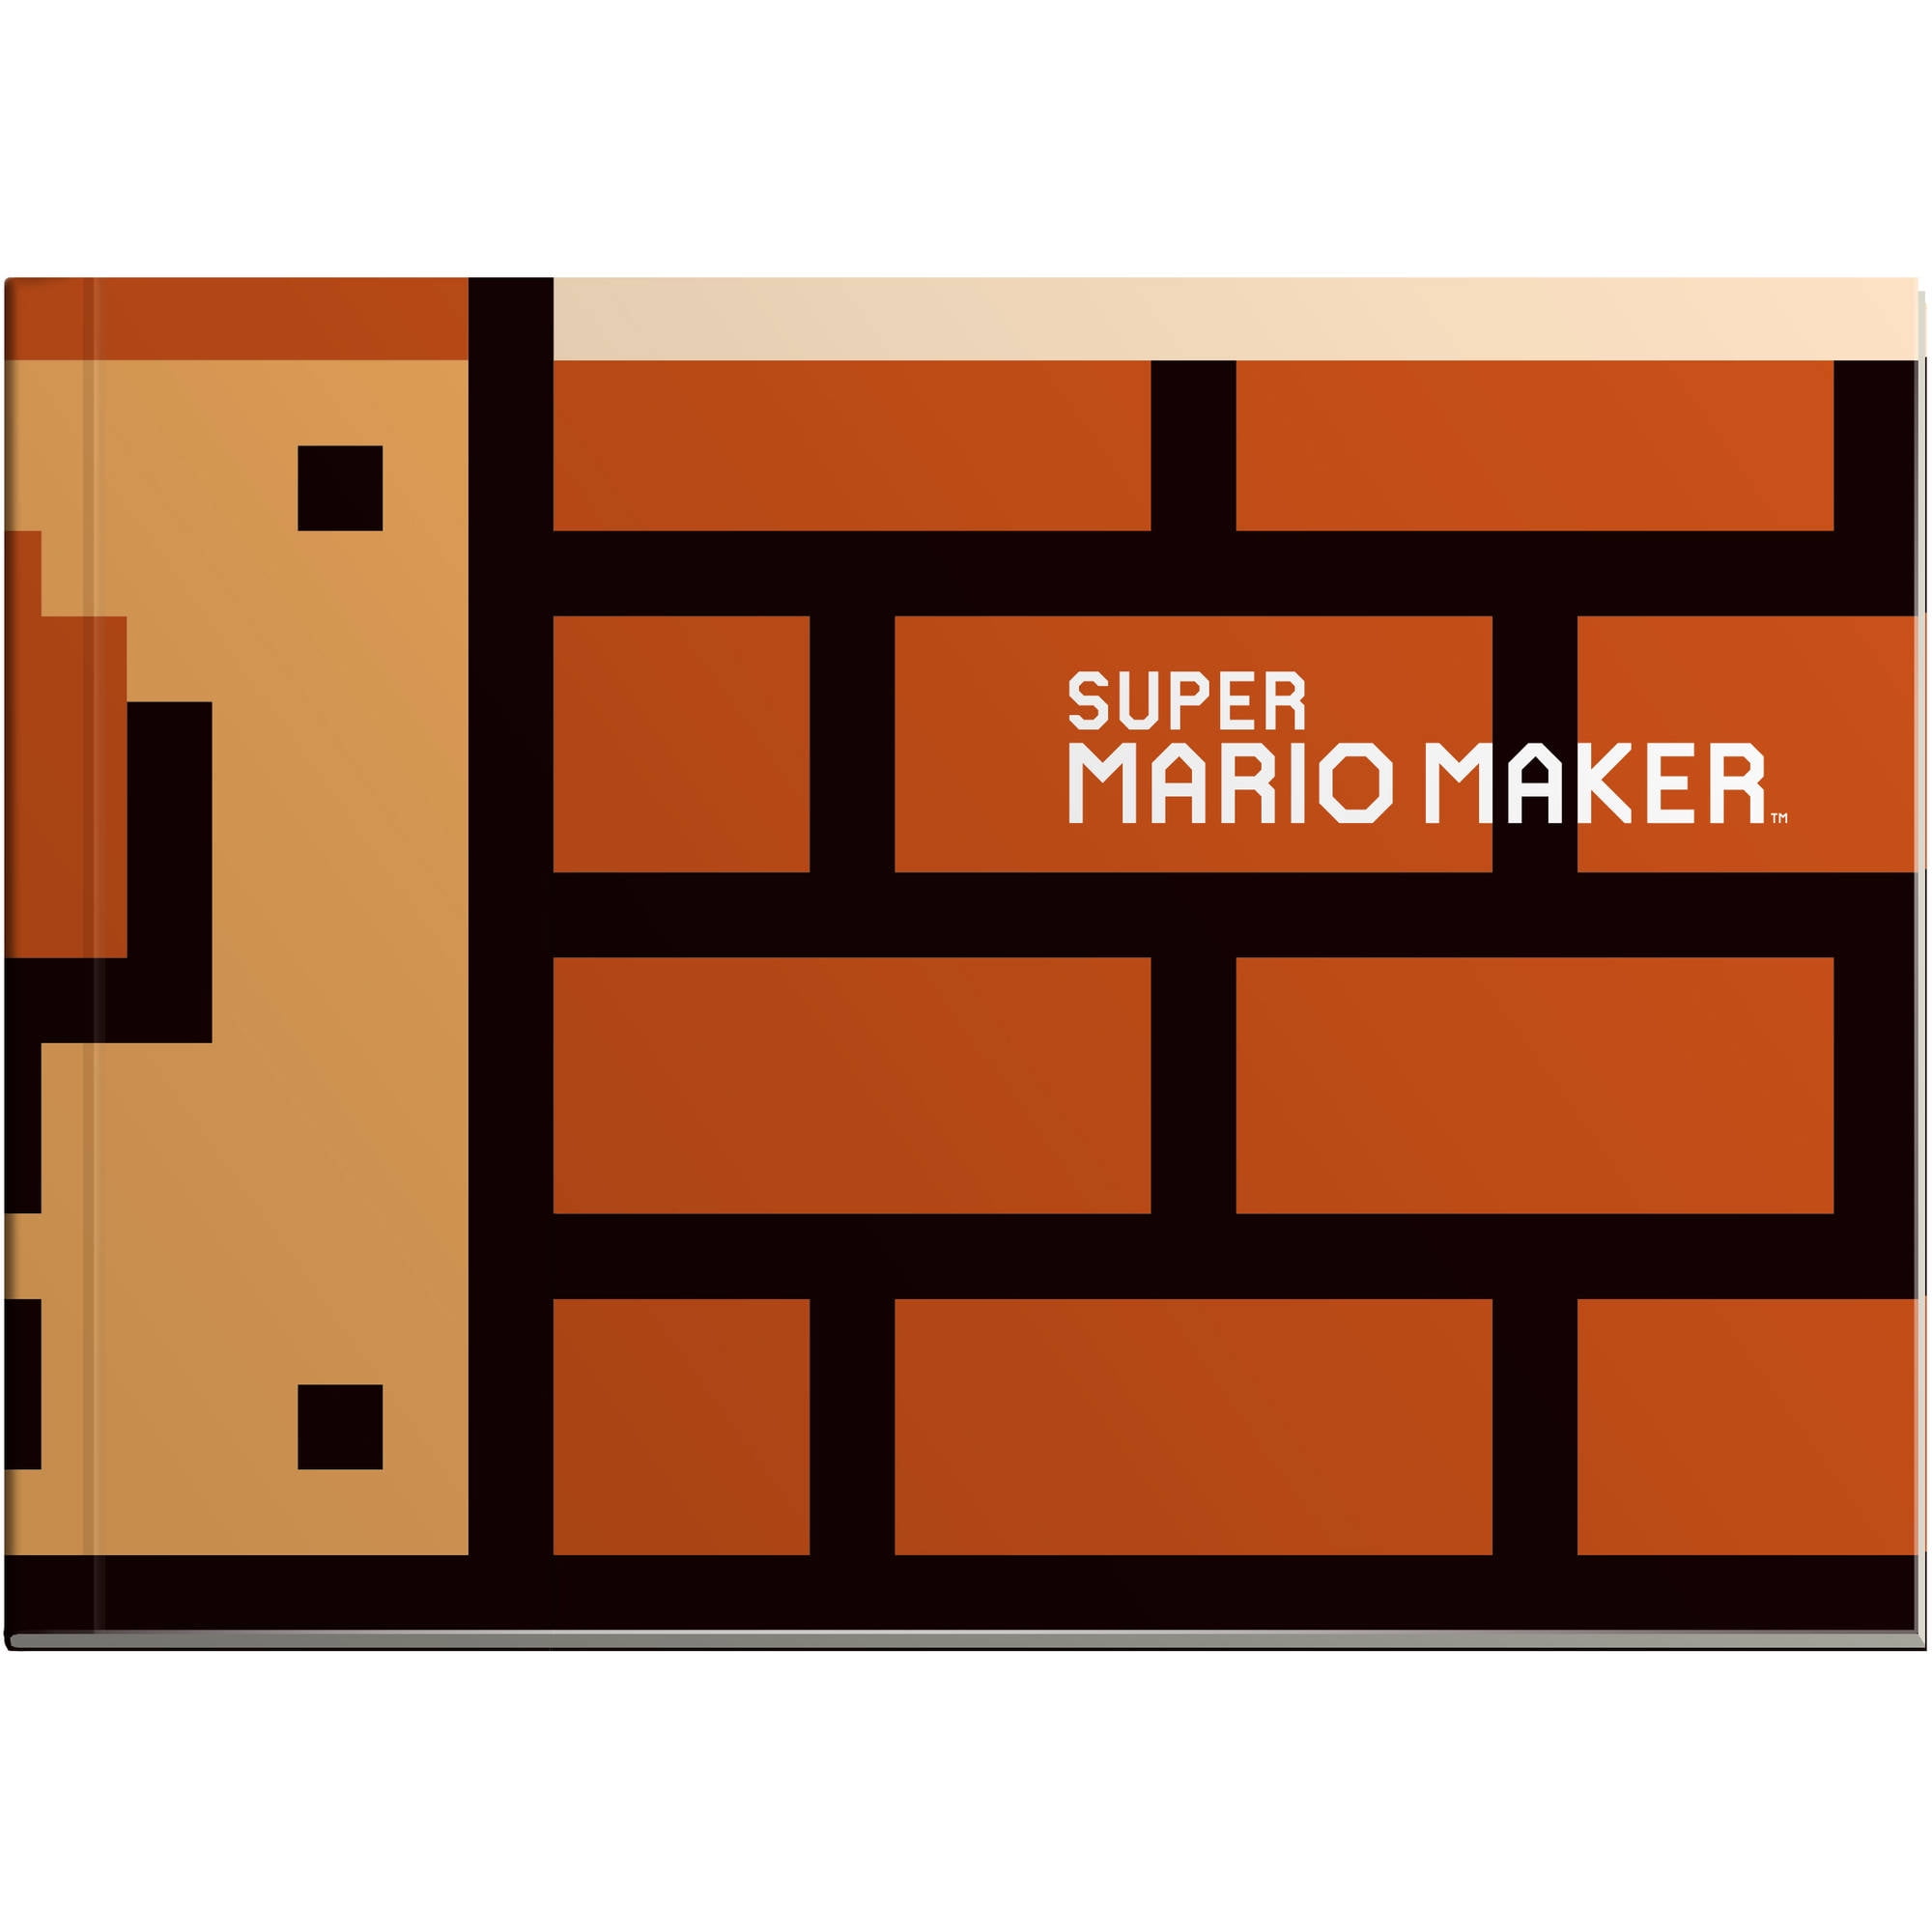 Super mario maker 3ds digital download